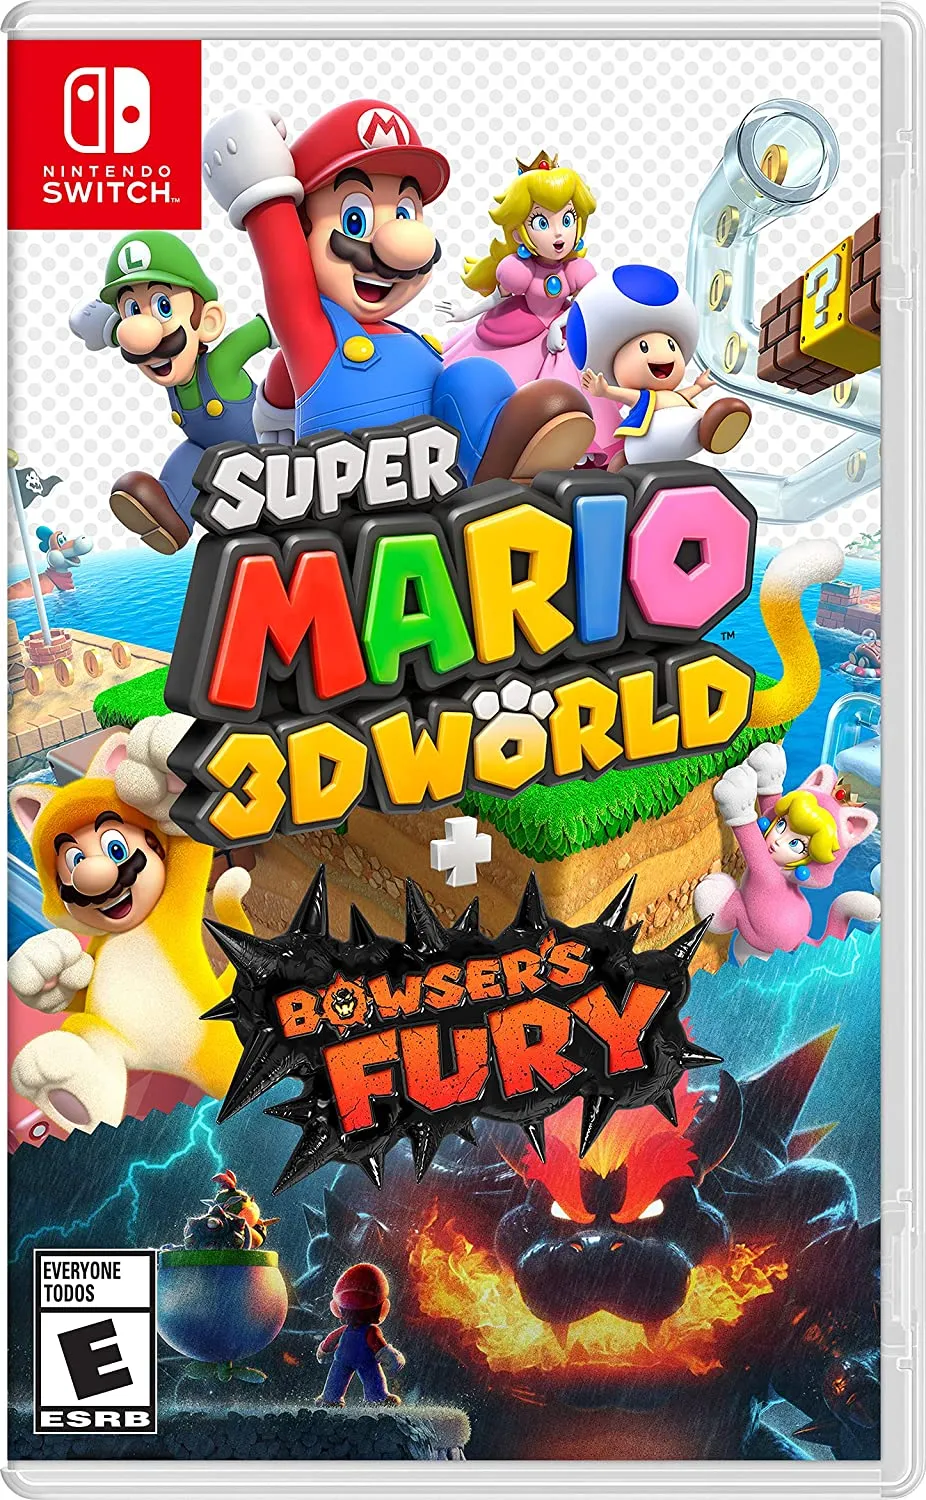 Super Mario 3D World + Bowser's Fury viršelio iliustracija, skirta Nintendo Switch.